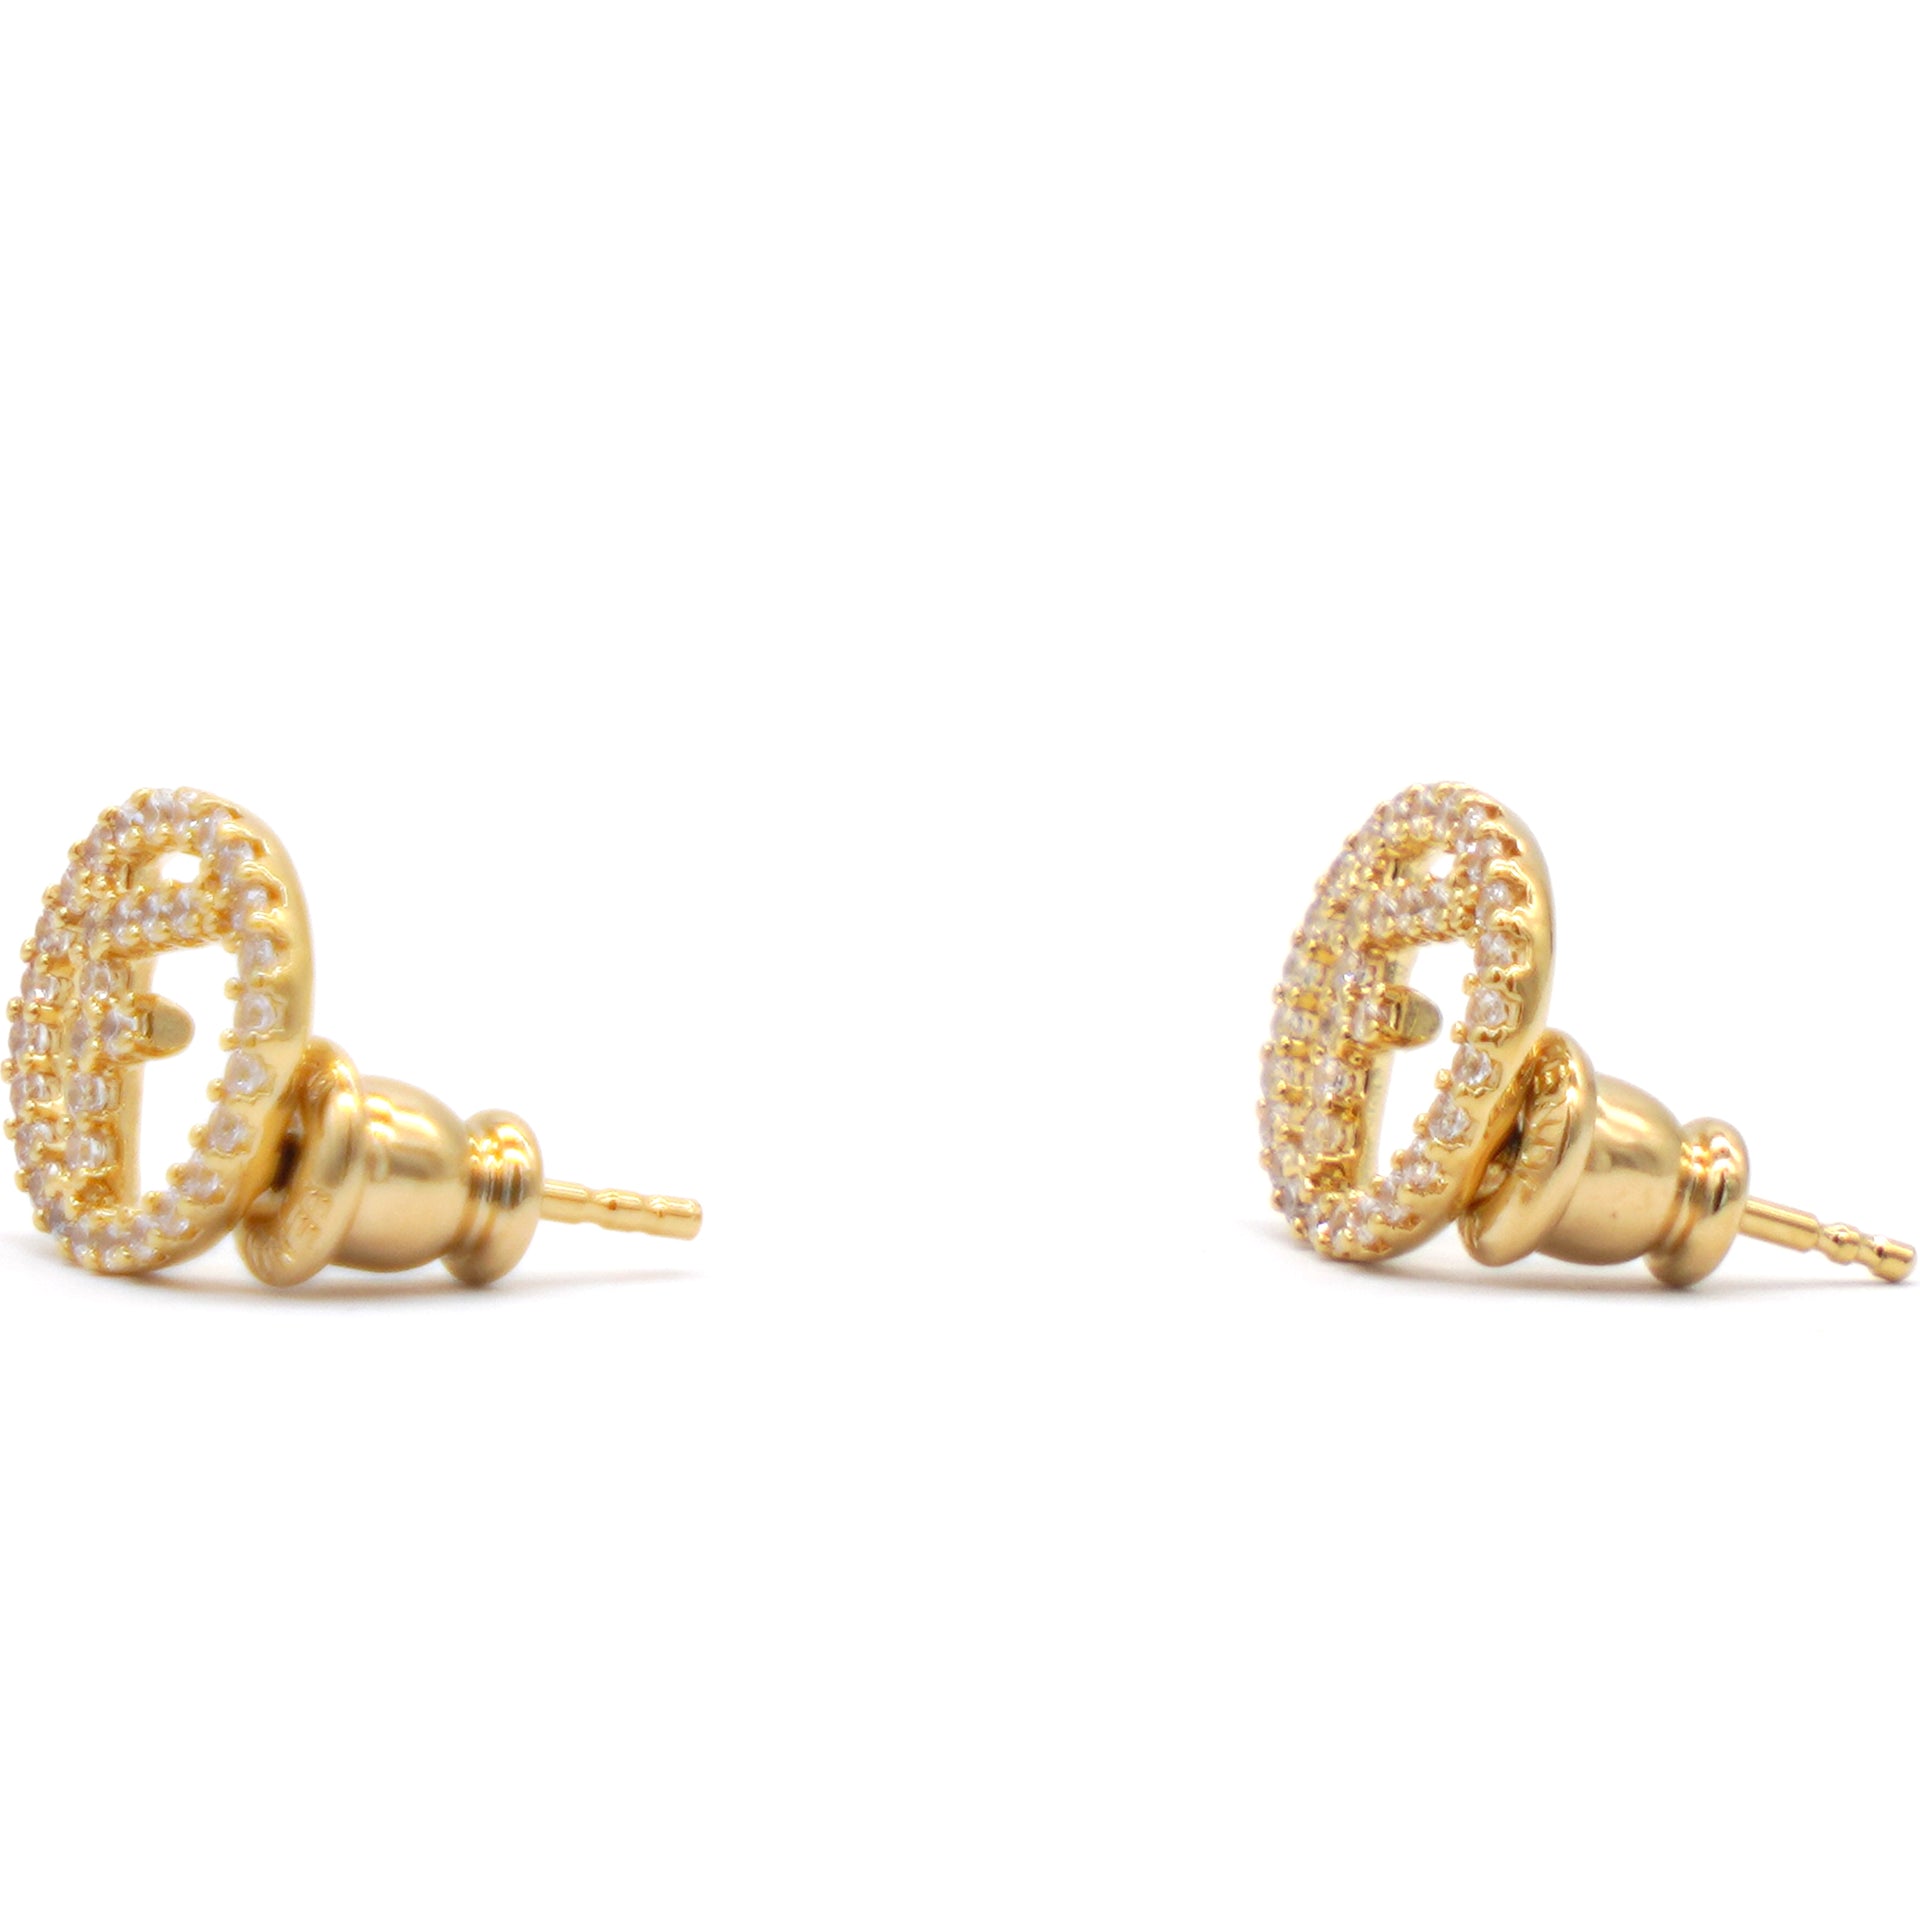 Fendi | Jewelry | Ff Fendi Stud Earrings Gold With Crystal Embellishment |  Poshmark